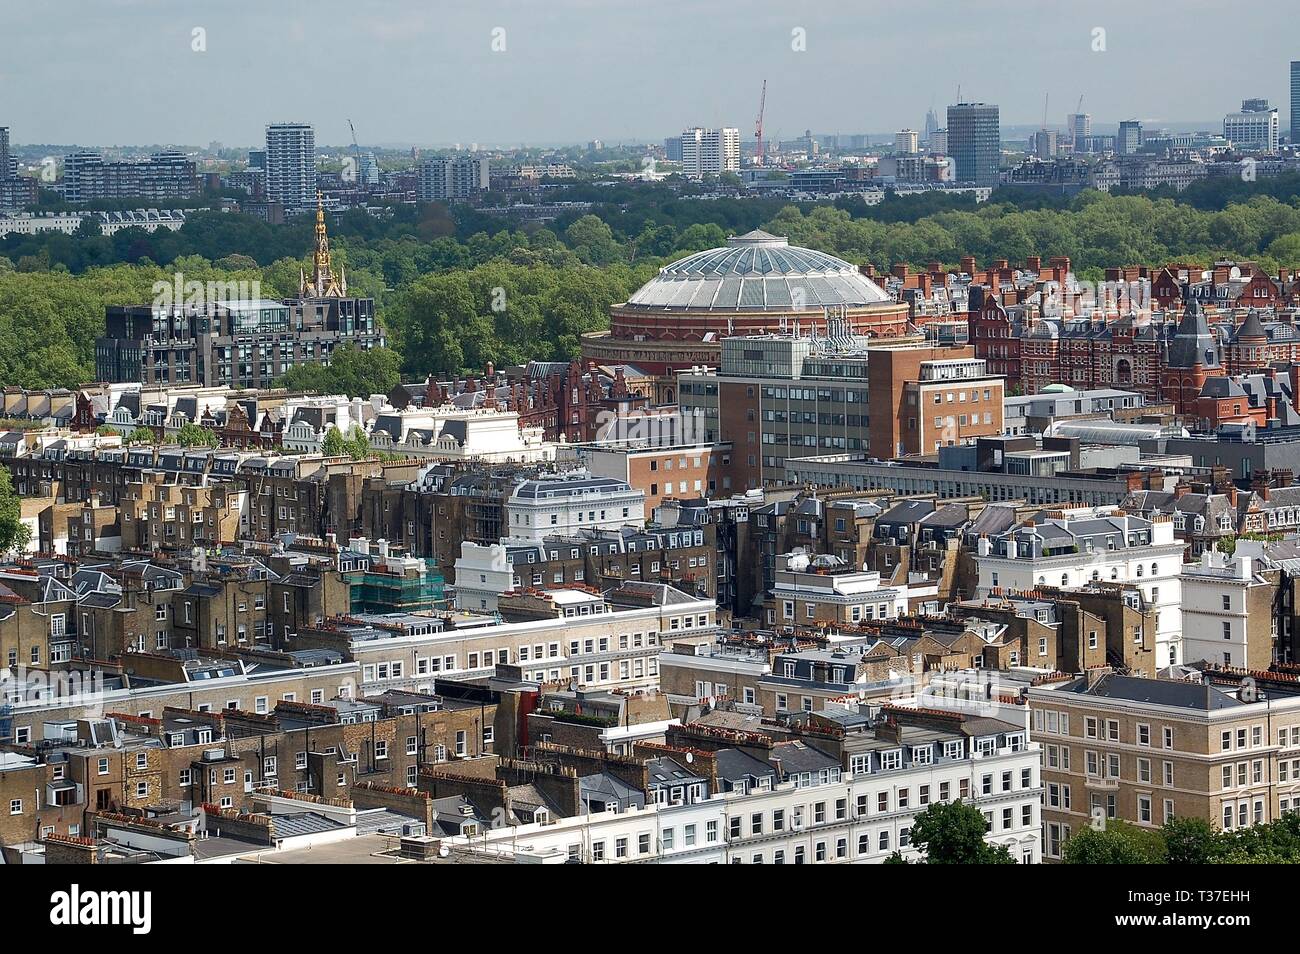 London skyline 210515 Stock Photo - Alamy